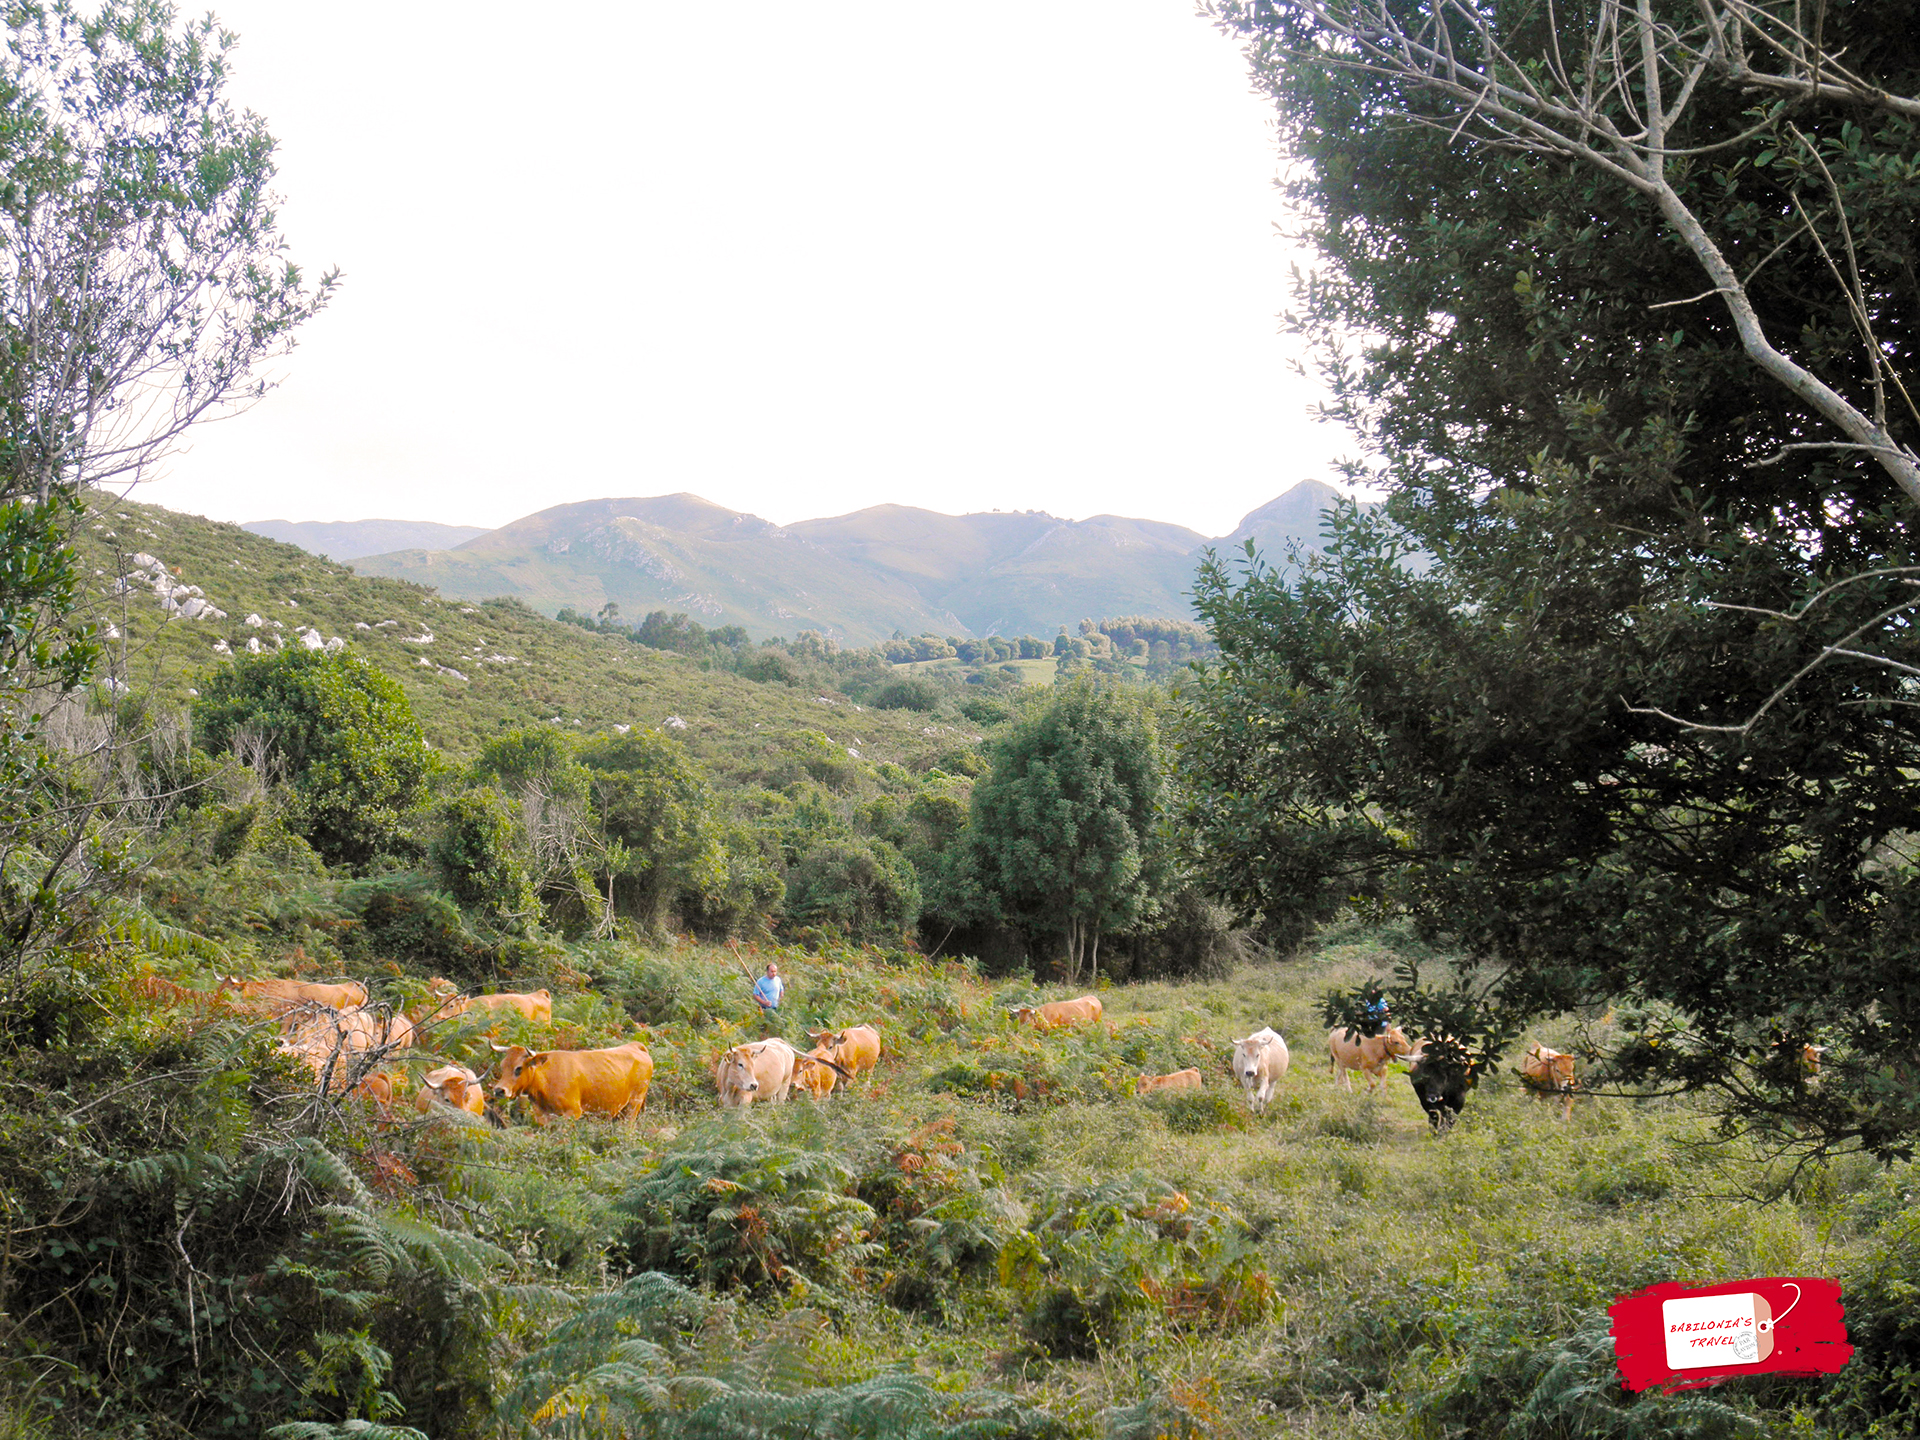 vacas asturias